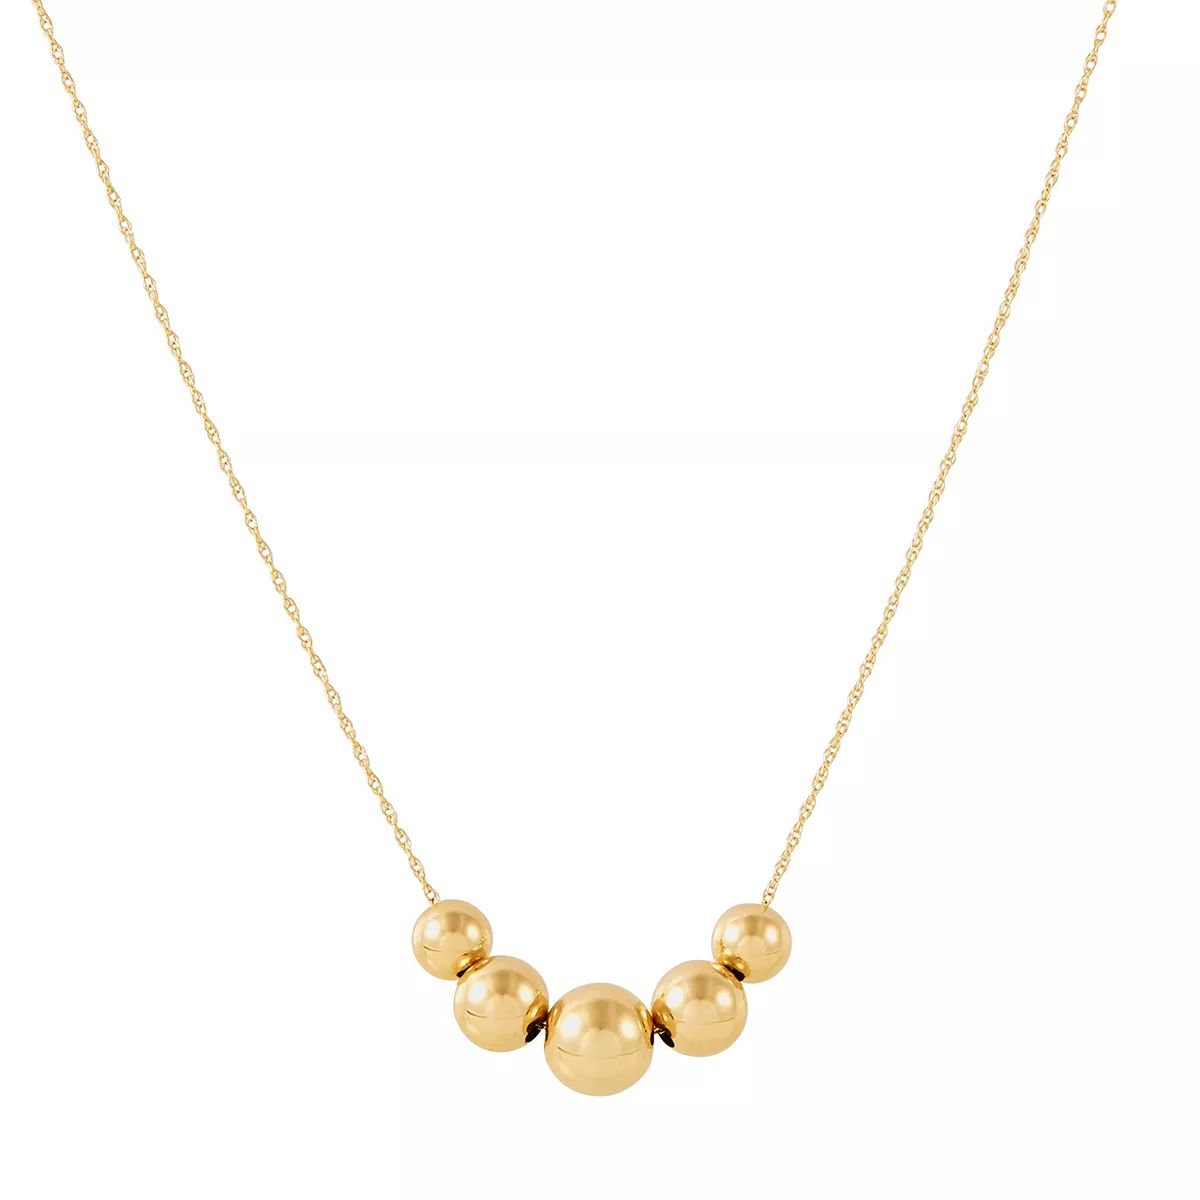 Everlasting Gold 14k Gold Graduated Bead Necklace | Kohl's